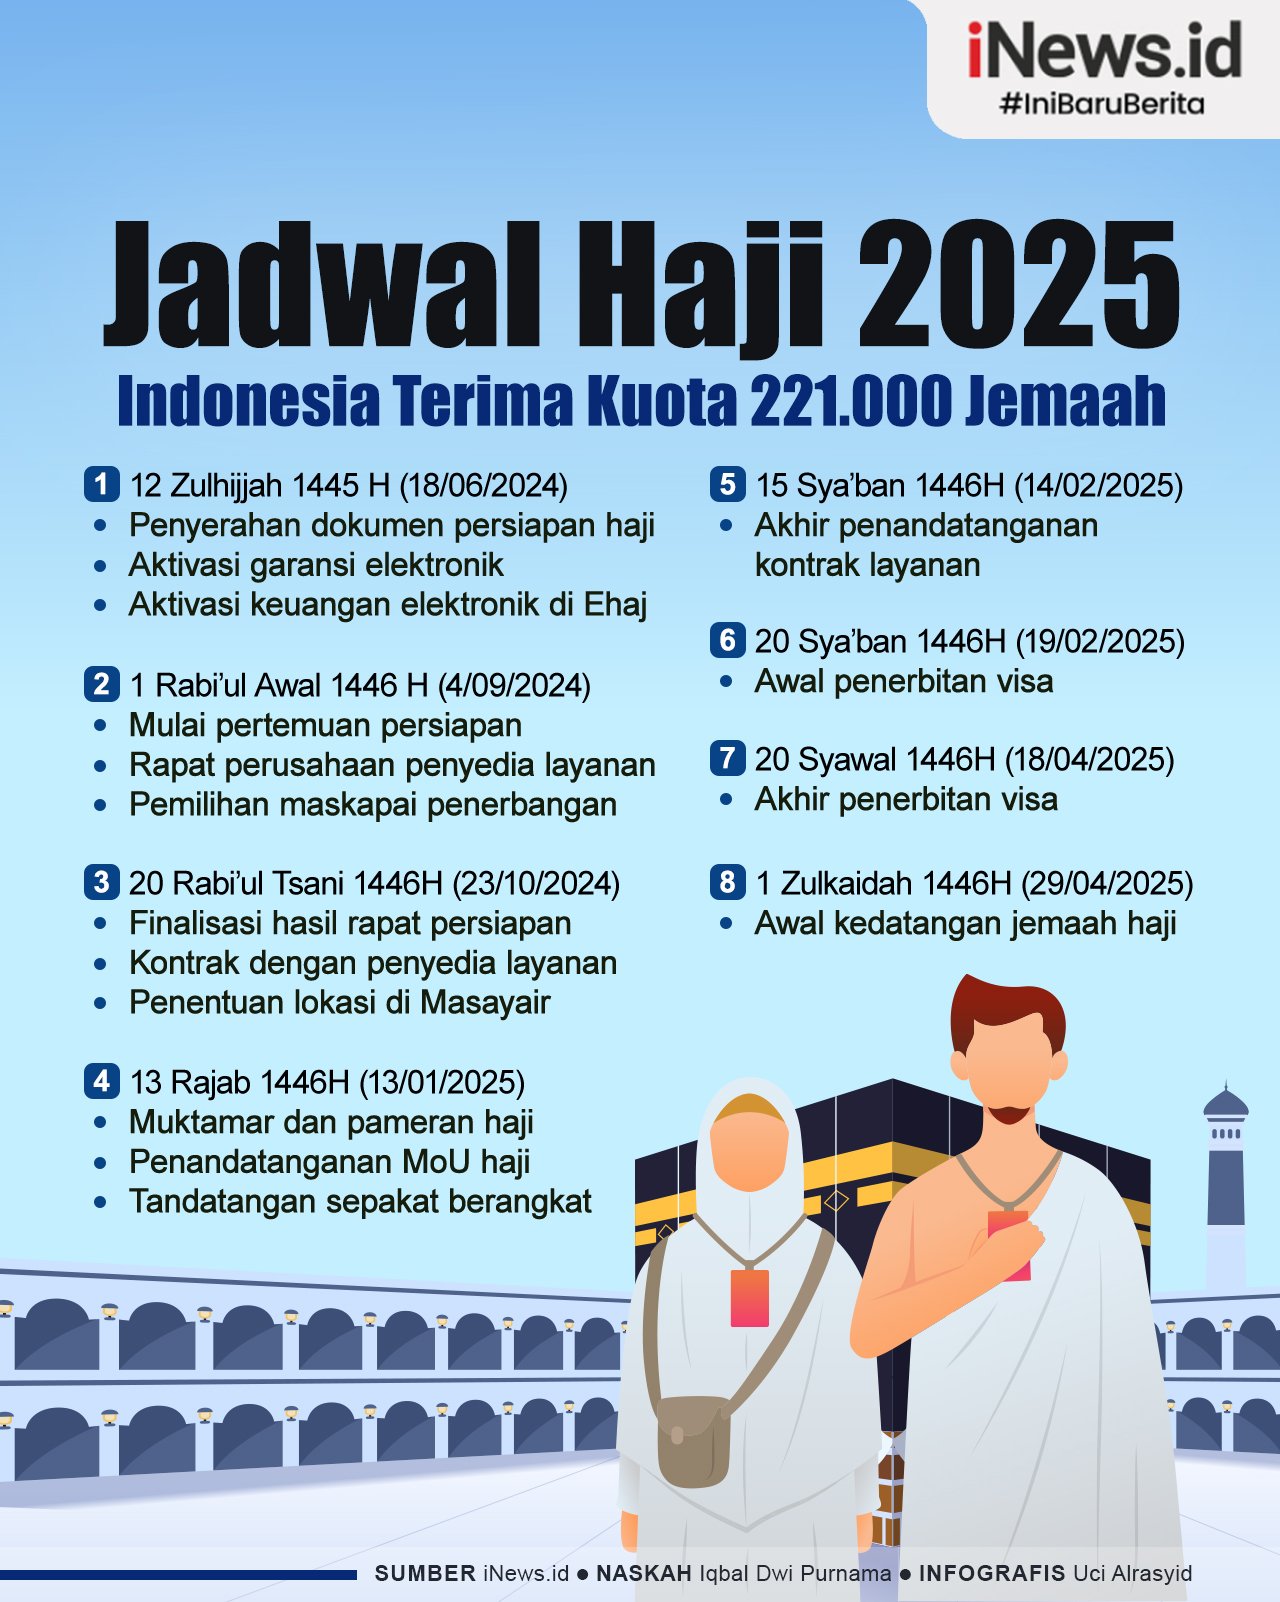 Infografis Jadwal Haji 2025, Indonesia Terima Kuota 221.000 Jemaah